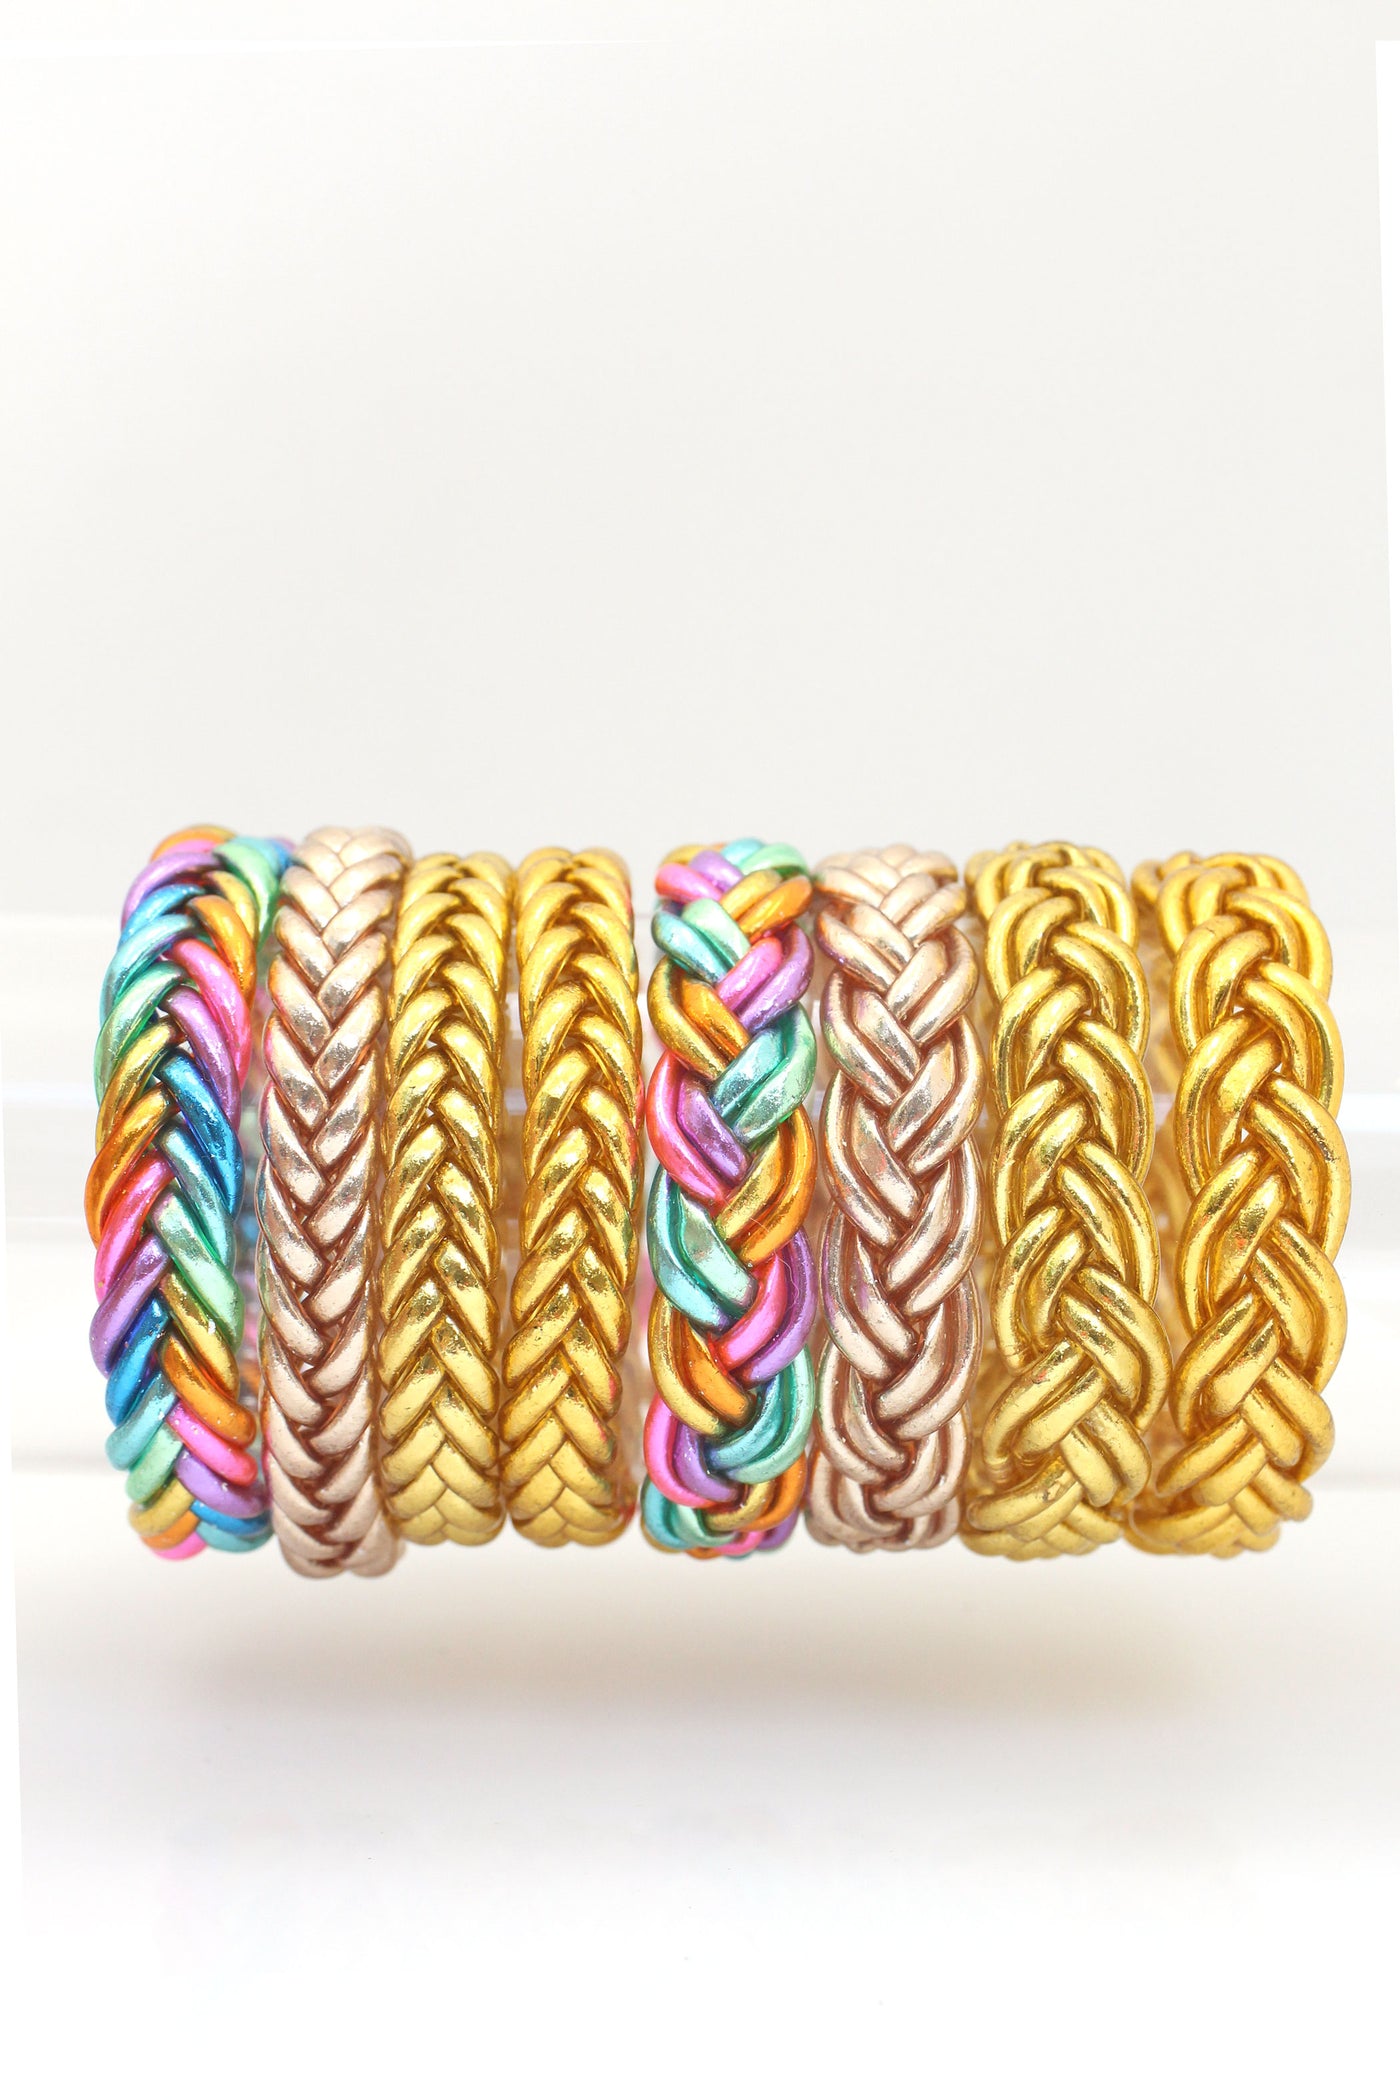 Rainbow or Gold Braided Thai Buddhist Temple Bracelets, Mantra Bangle, Sizes Available